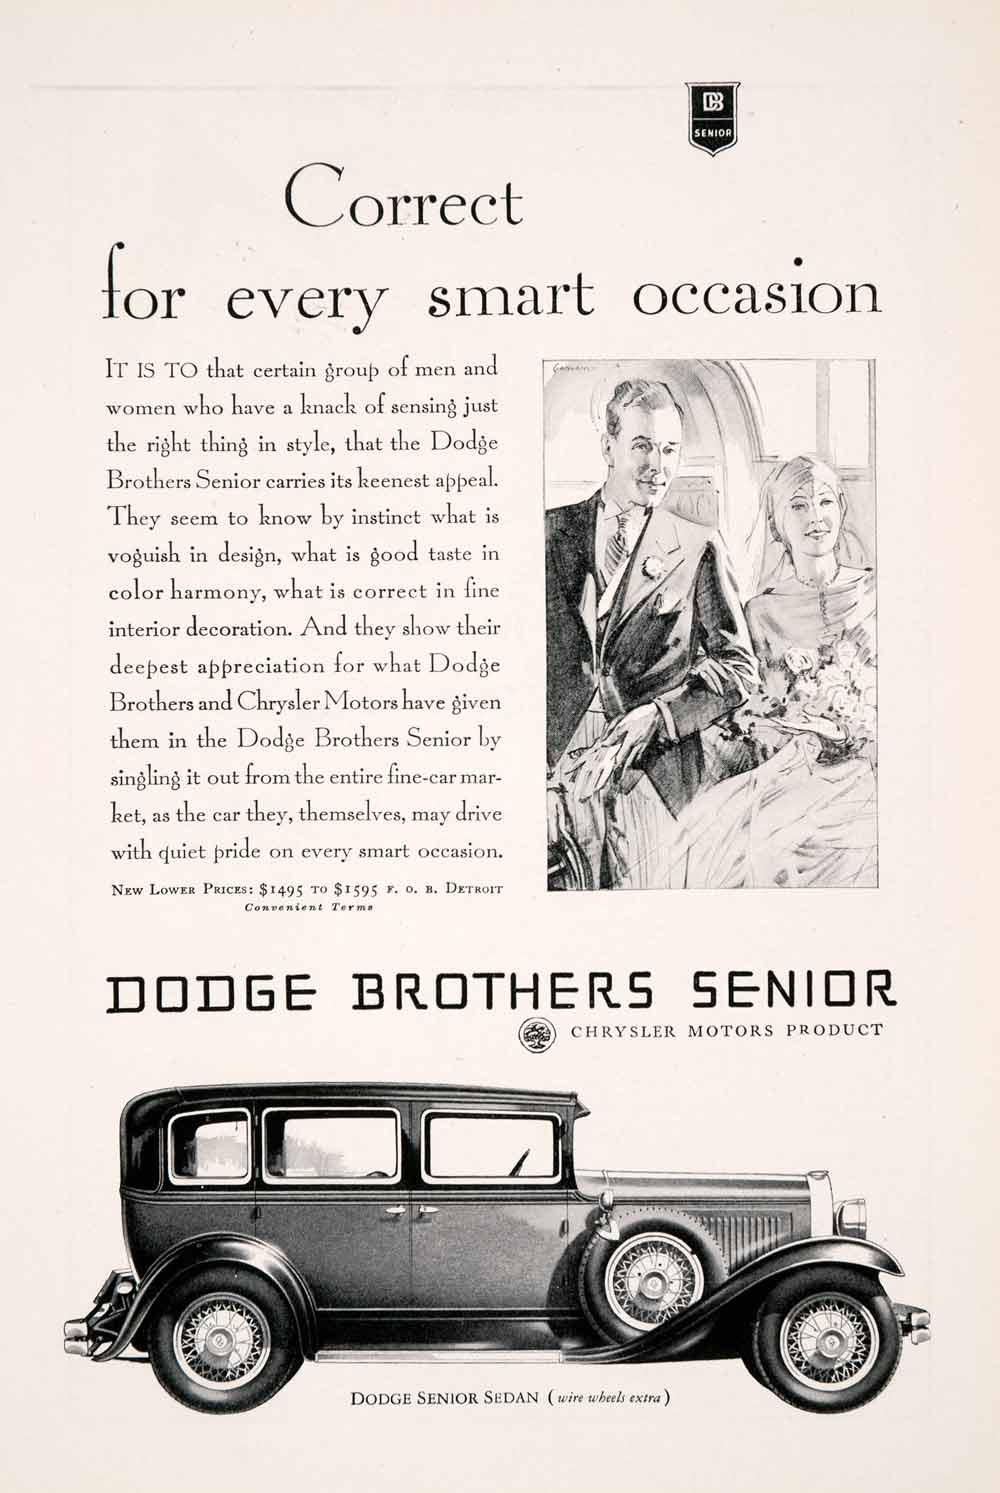 1929 Ad Antique Enclosed Dodge Brothers Senior Sedan Marriage Wedding NGM3